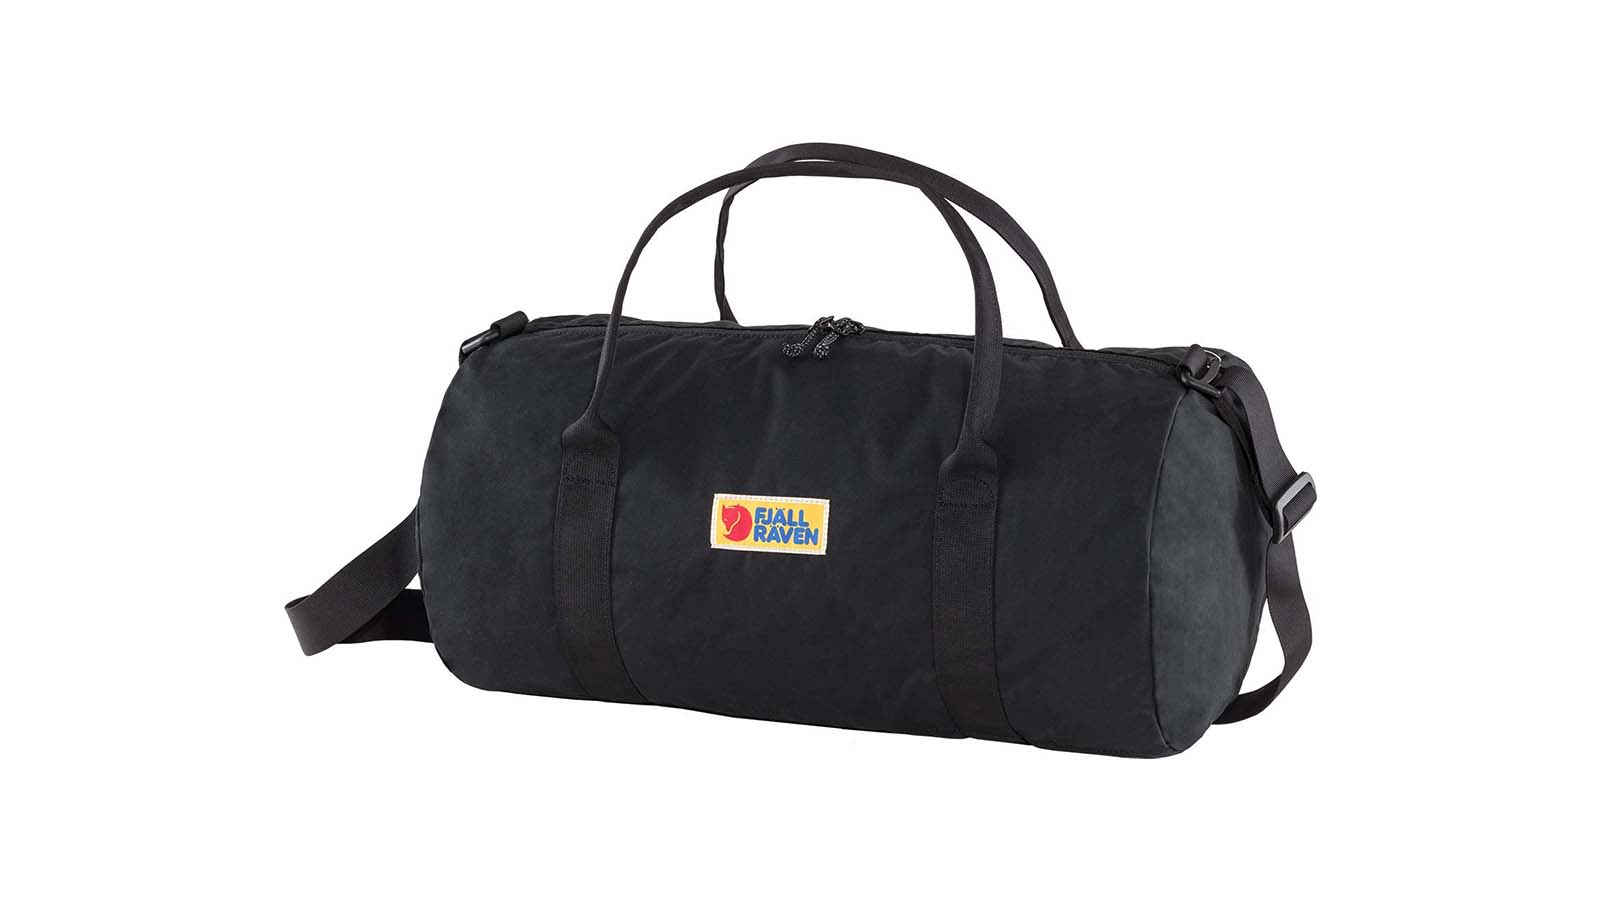 DKNY Rapture Weekender Boarding Bag - Macy's  Stylish luggage, Luggage sets  cute, Luggage bags travel